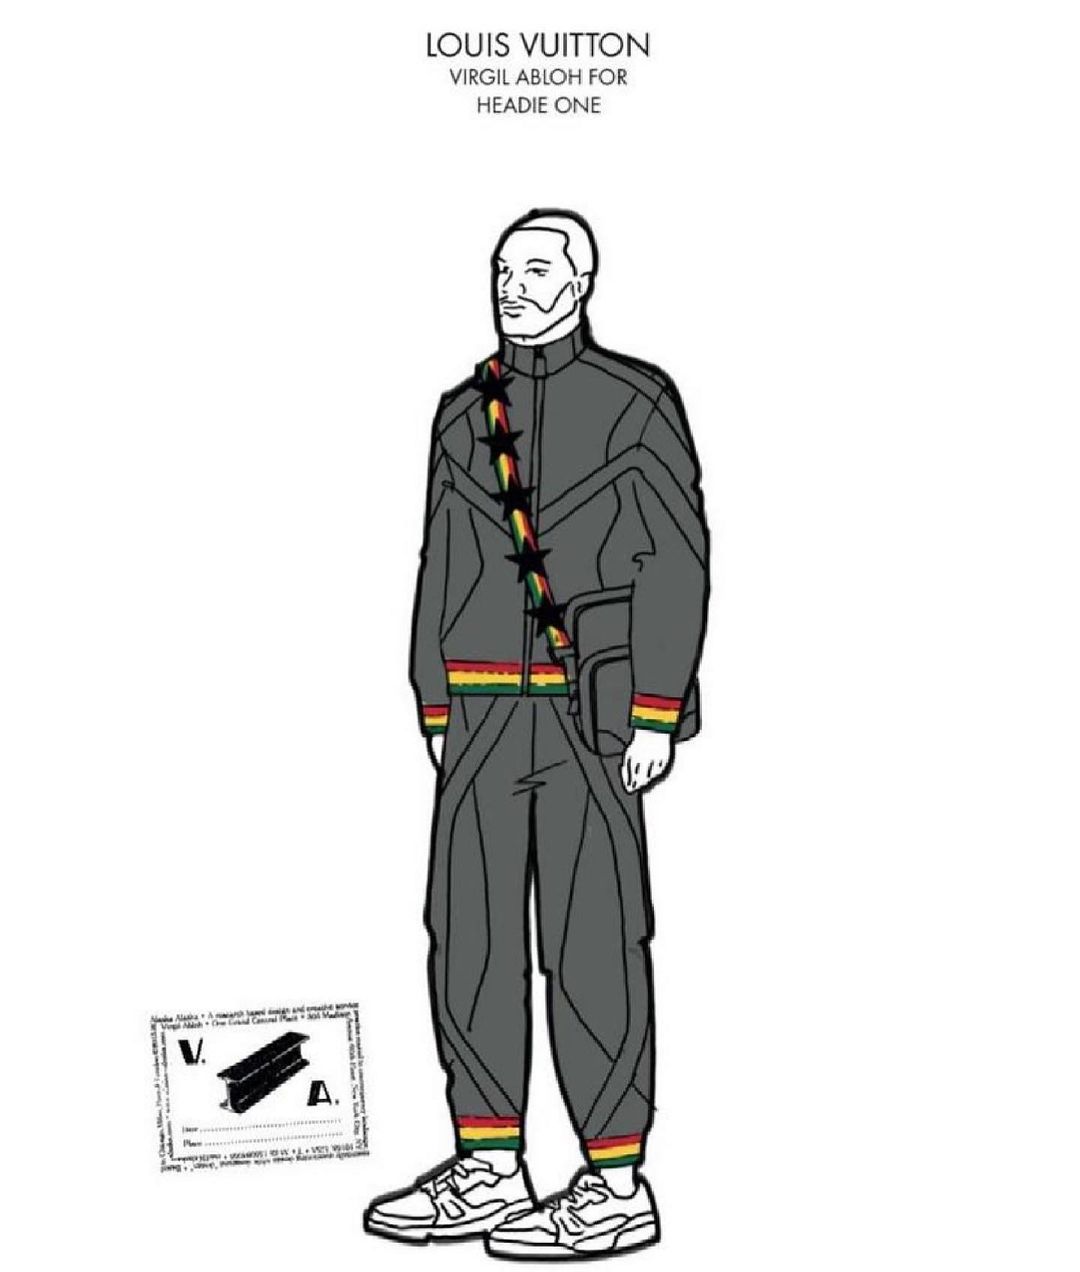 HeadieOne 's favourite item in his wardrobe 😮‍💨 #Virgil #LouisVuitton  #shorts 